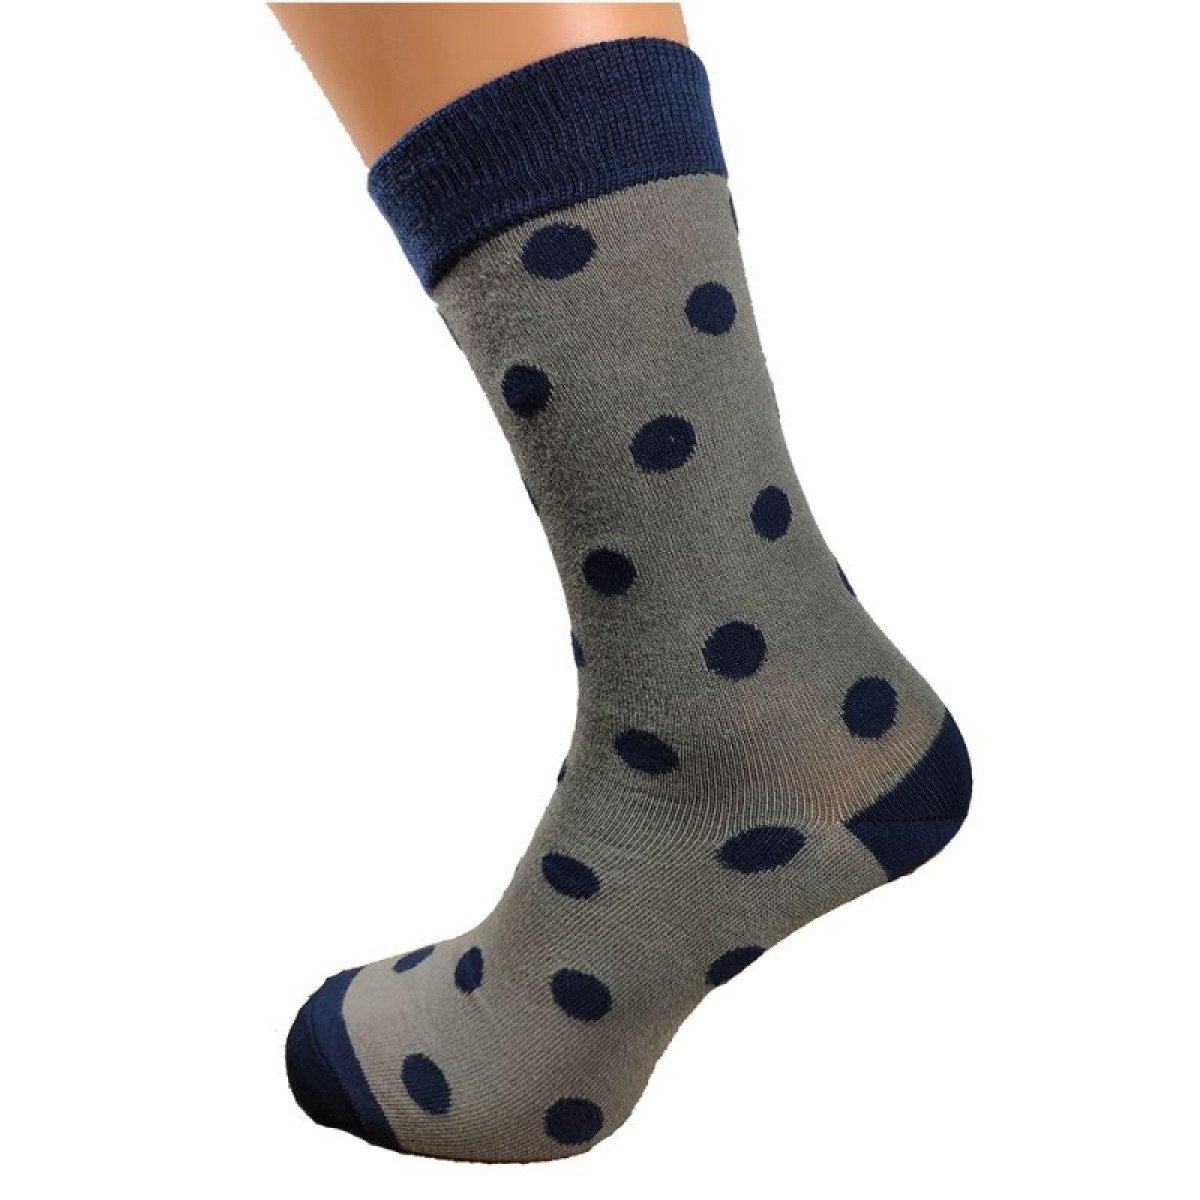 Joya Grey with Blue Dots Bamboo Men's Socks